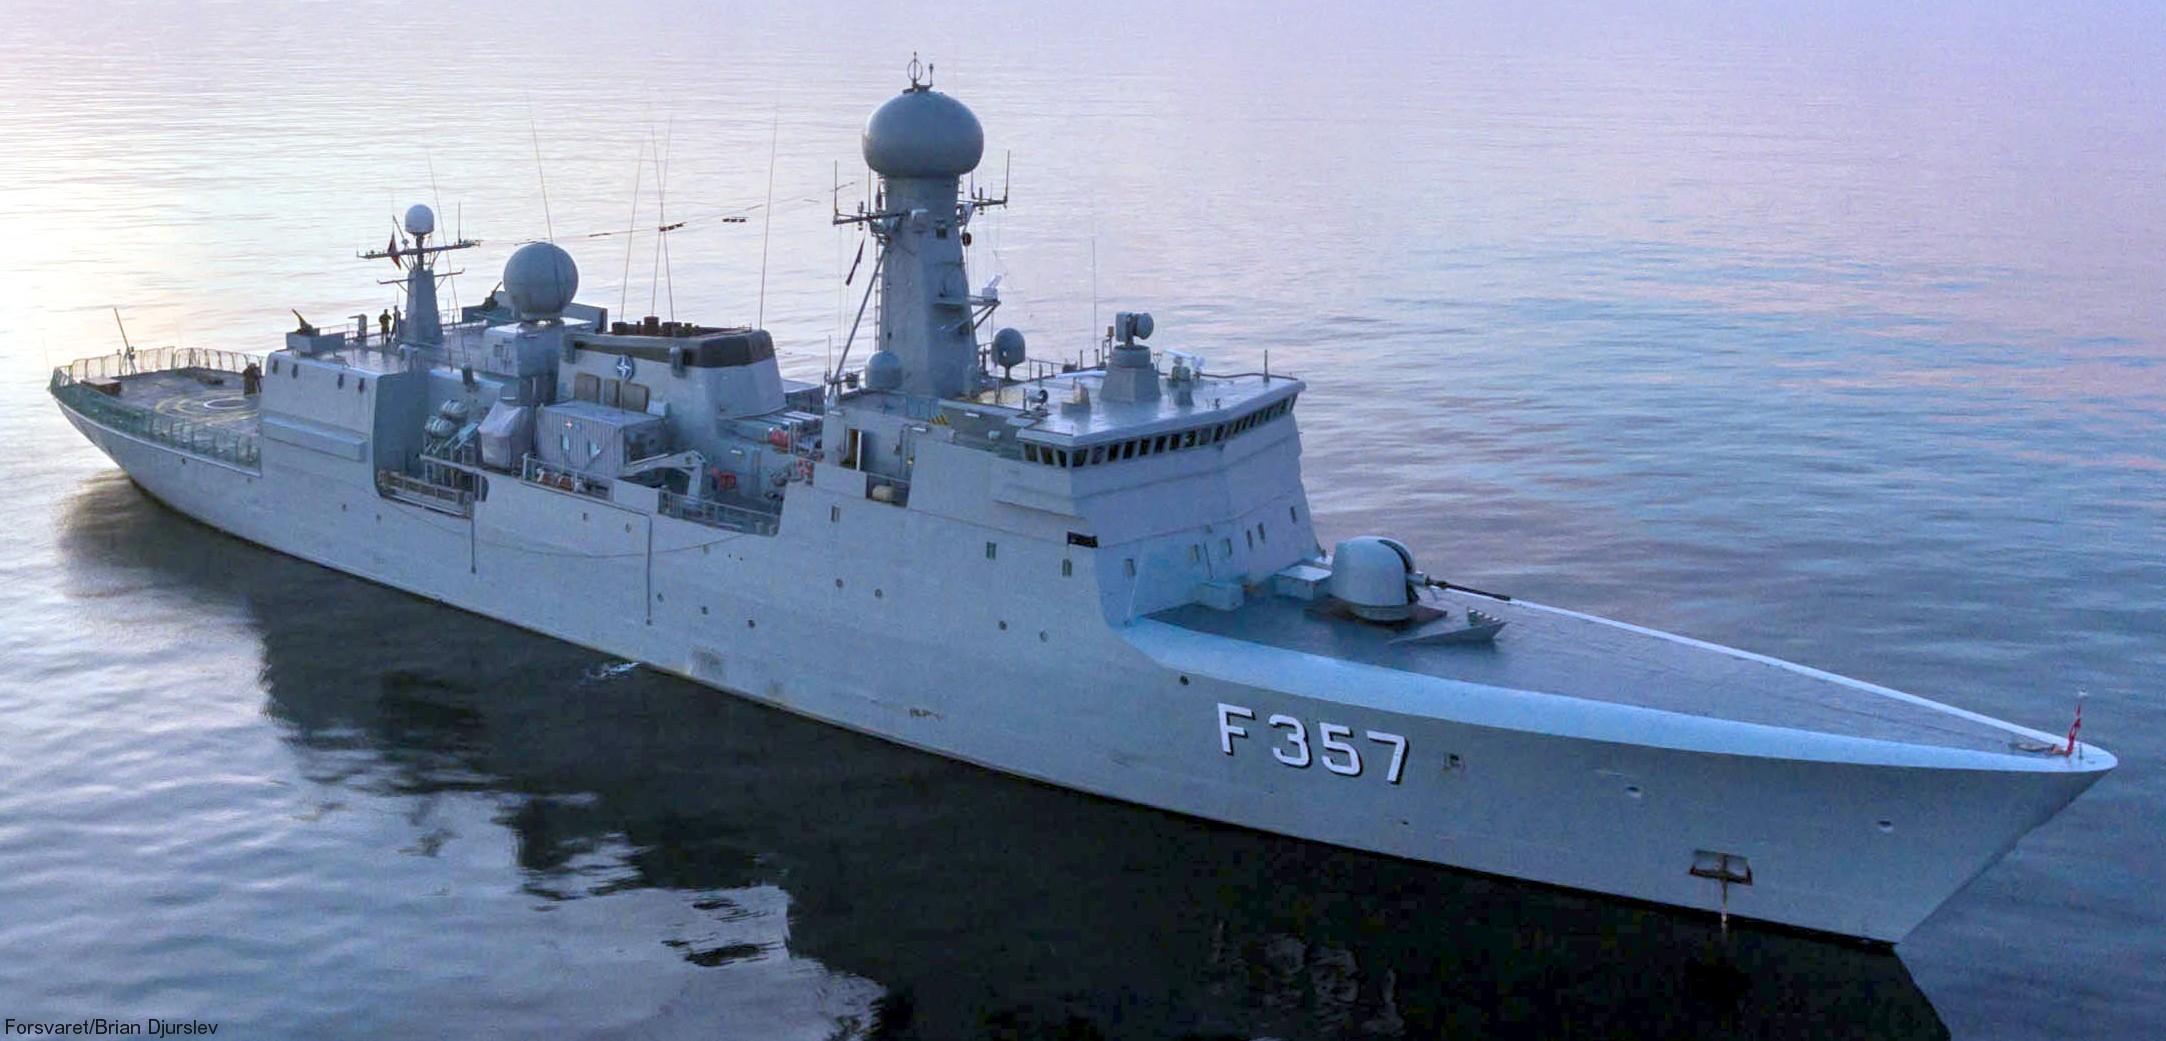 f-357 hdms thetis ocean patrol frigate royal danish navy kongelige danske marine inspektionsskibet 13